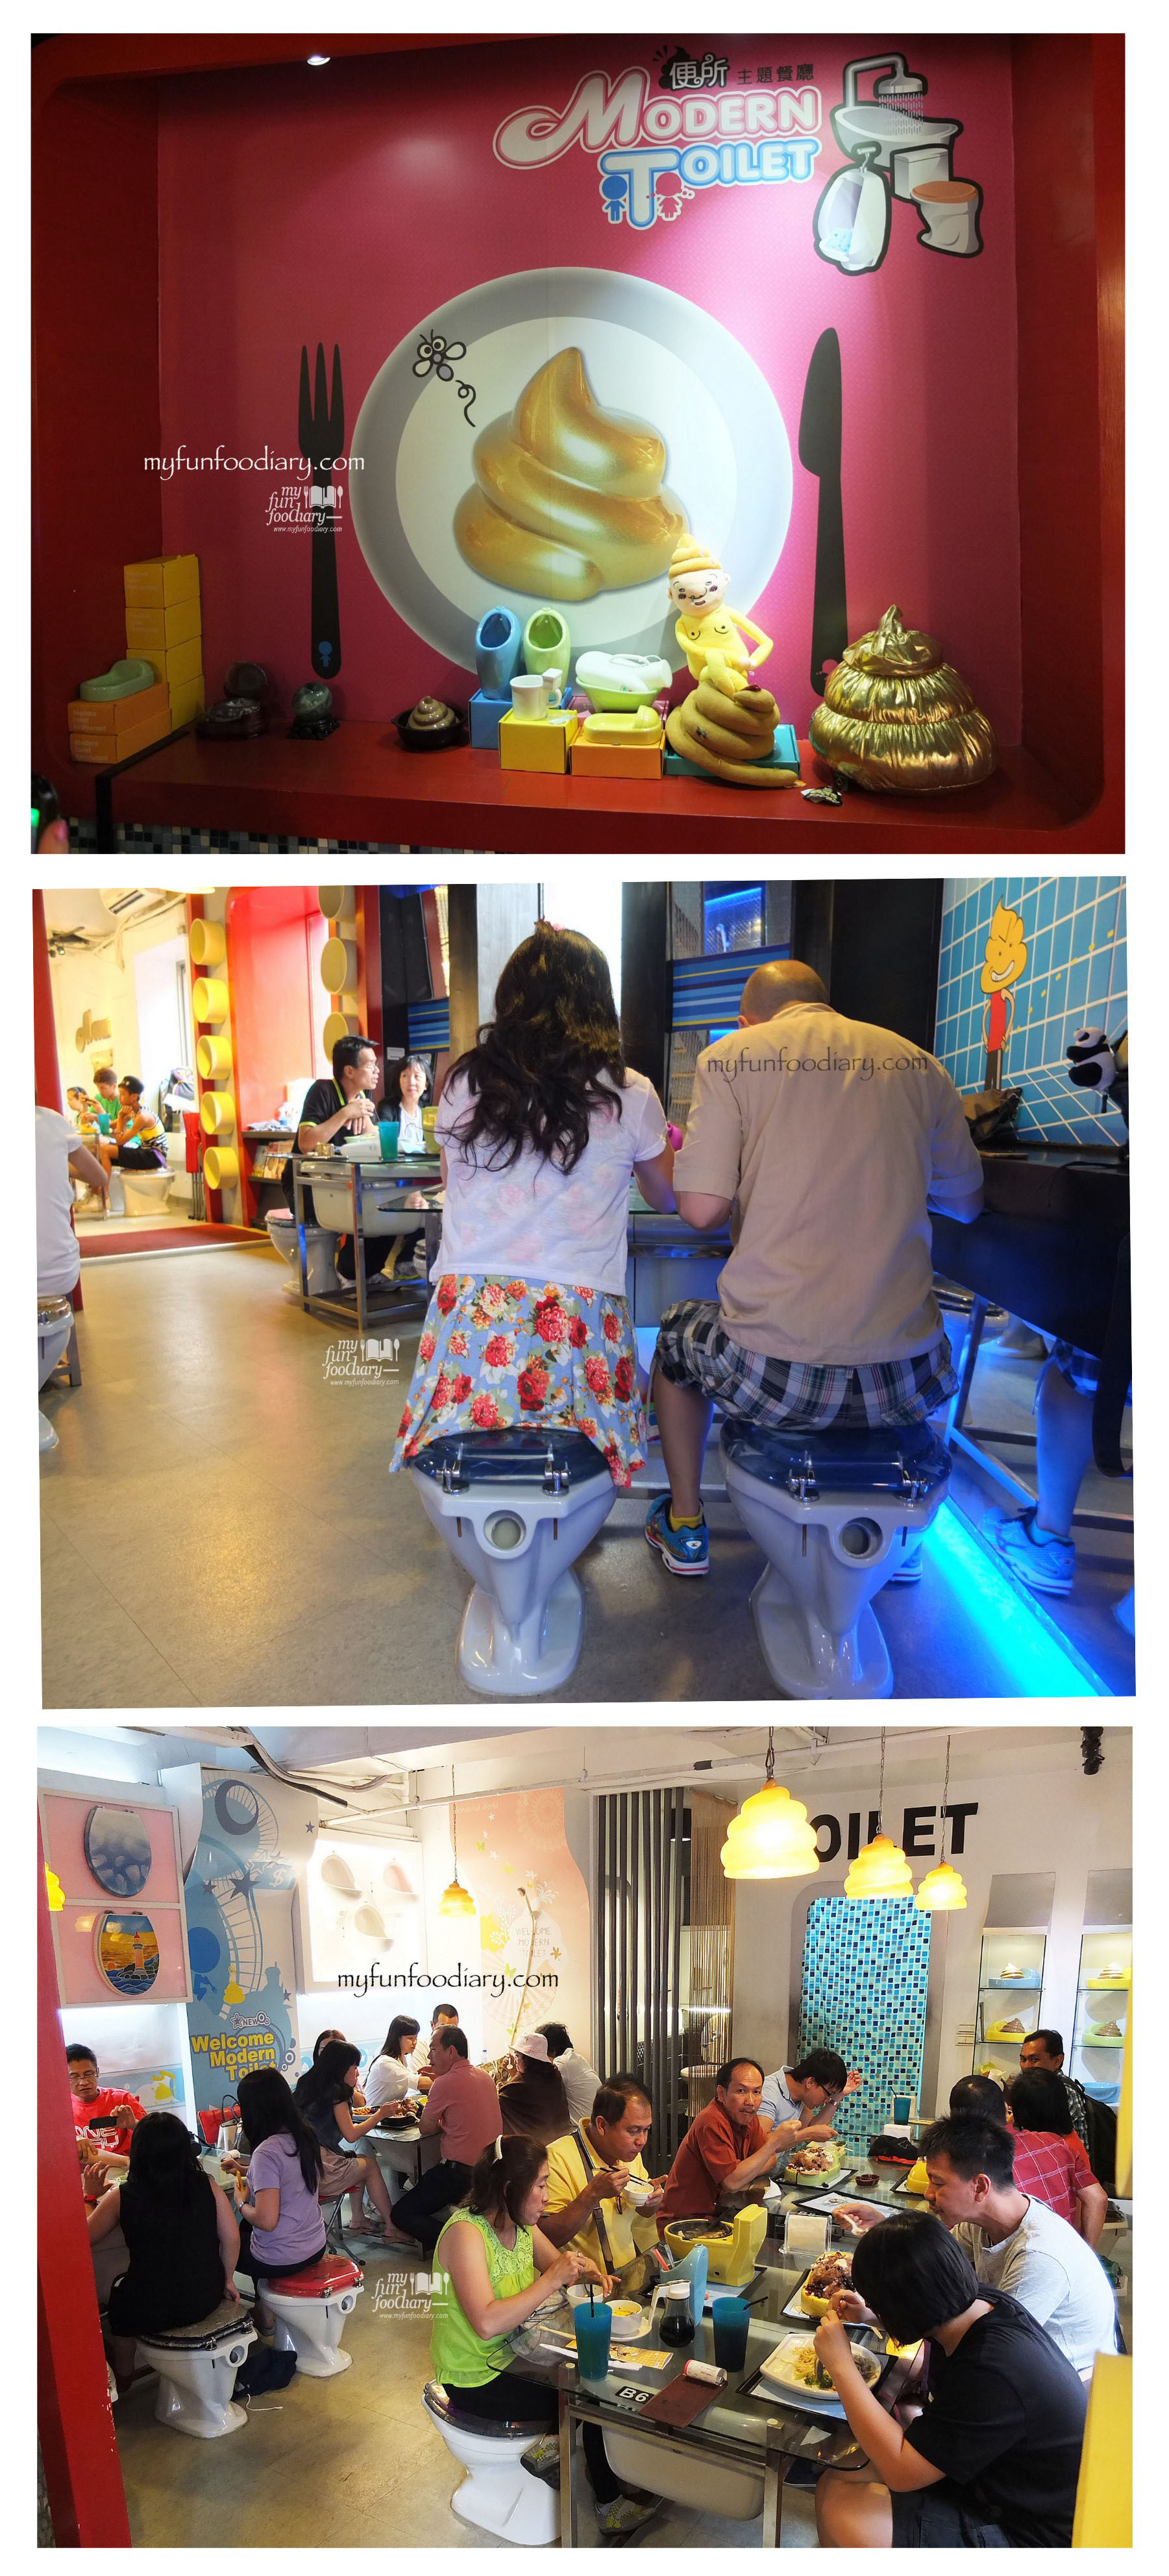 Suasana di dalam Modern Toilet Cafe Taiwan by Myfunfoodiary collage